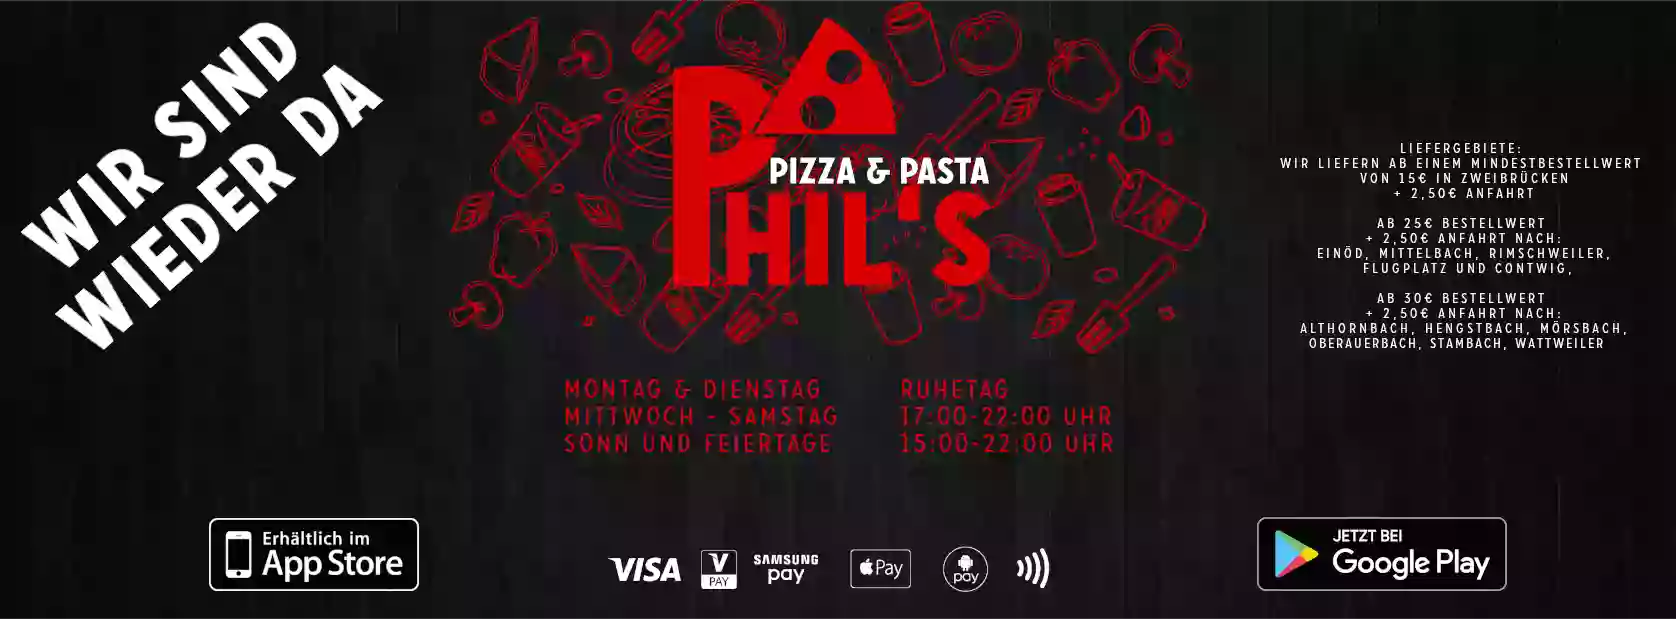 Phil’s Pizza und Pasta